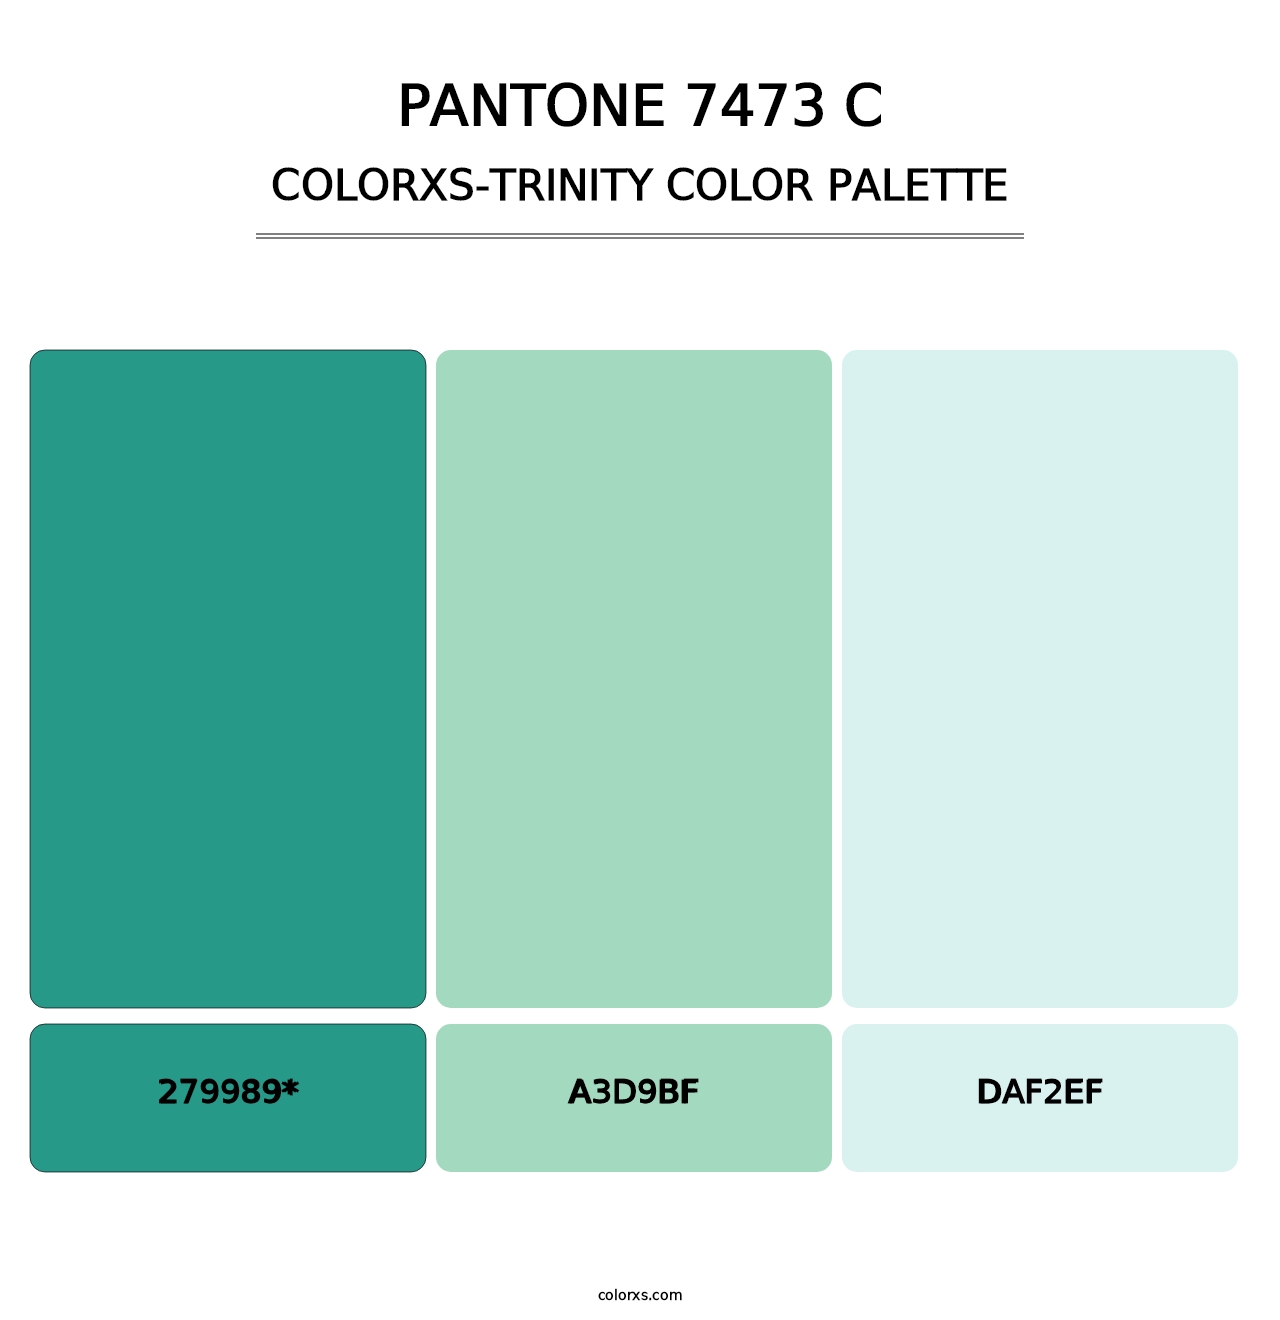 PANTONE 7473 C - Colorxs Trinity Palette